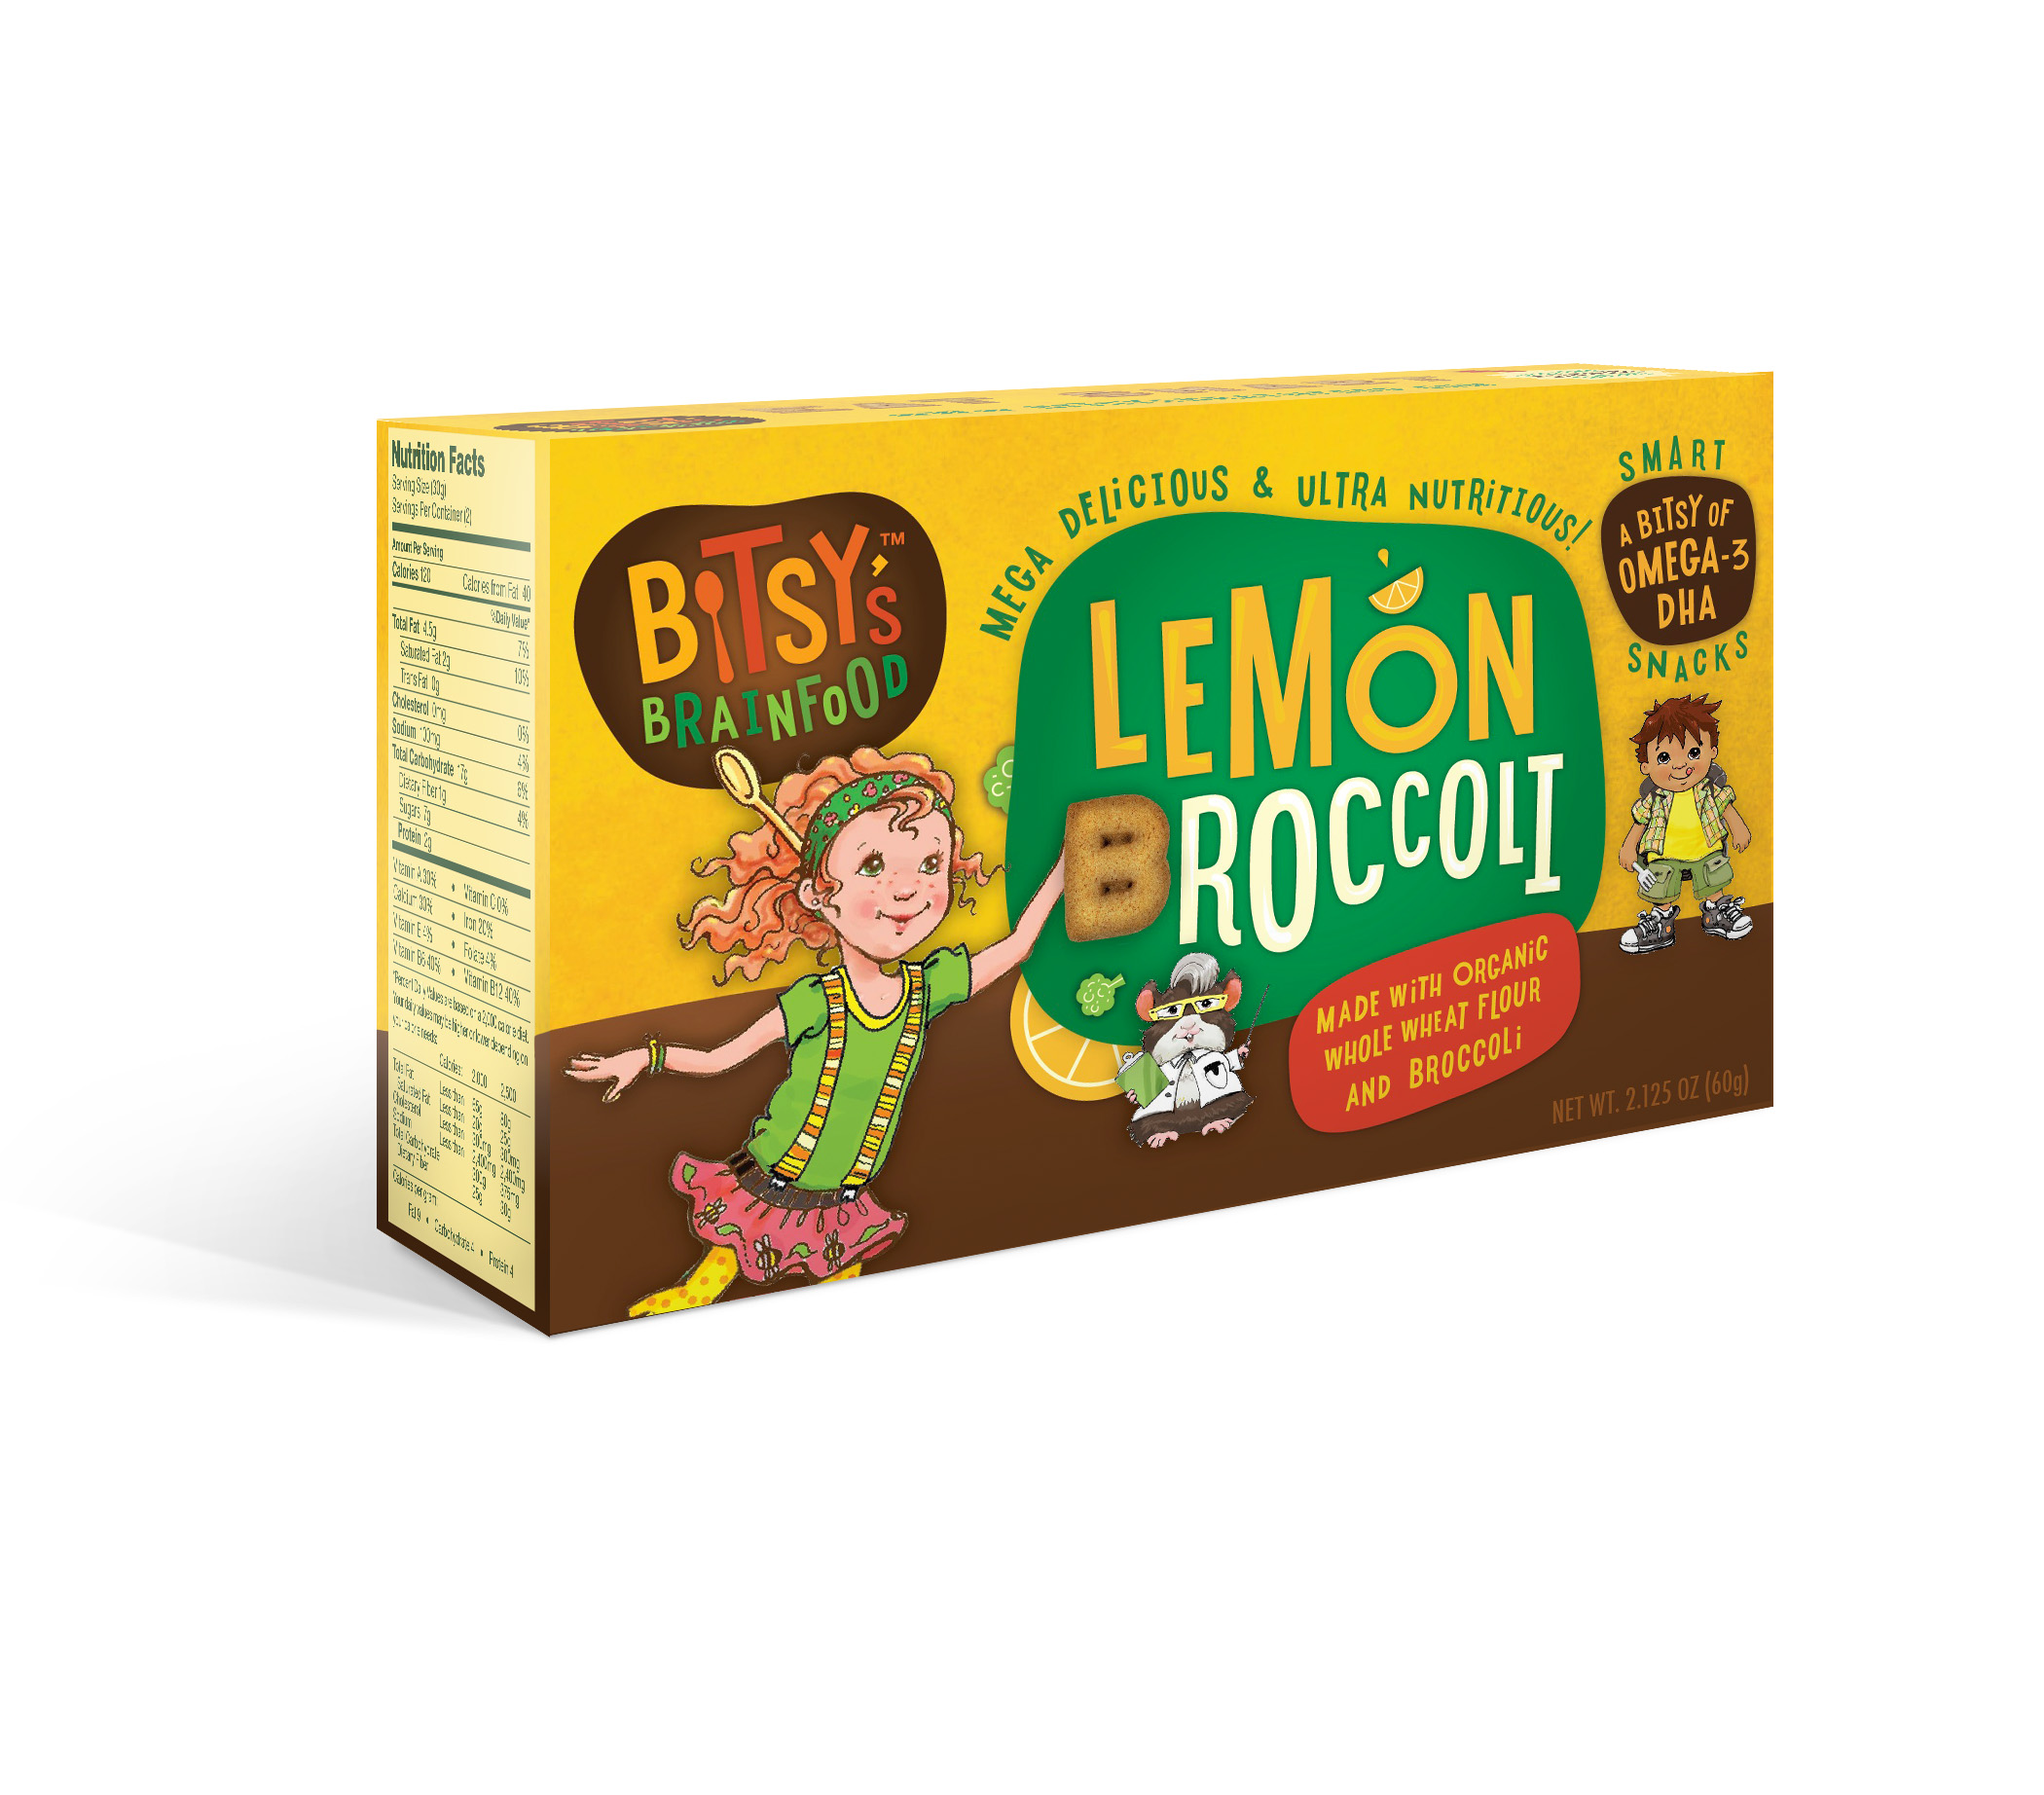 bitsys-brainfood-lemon-broccoli